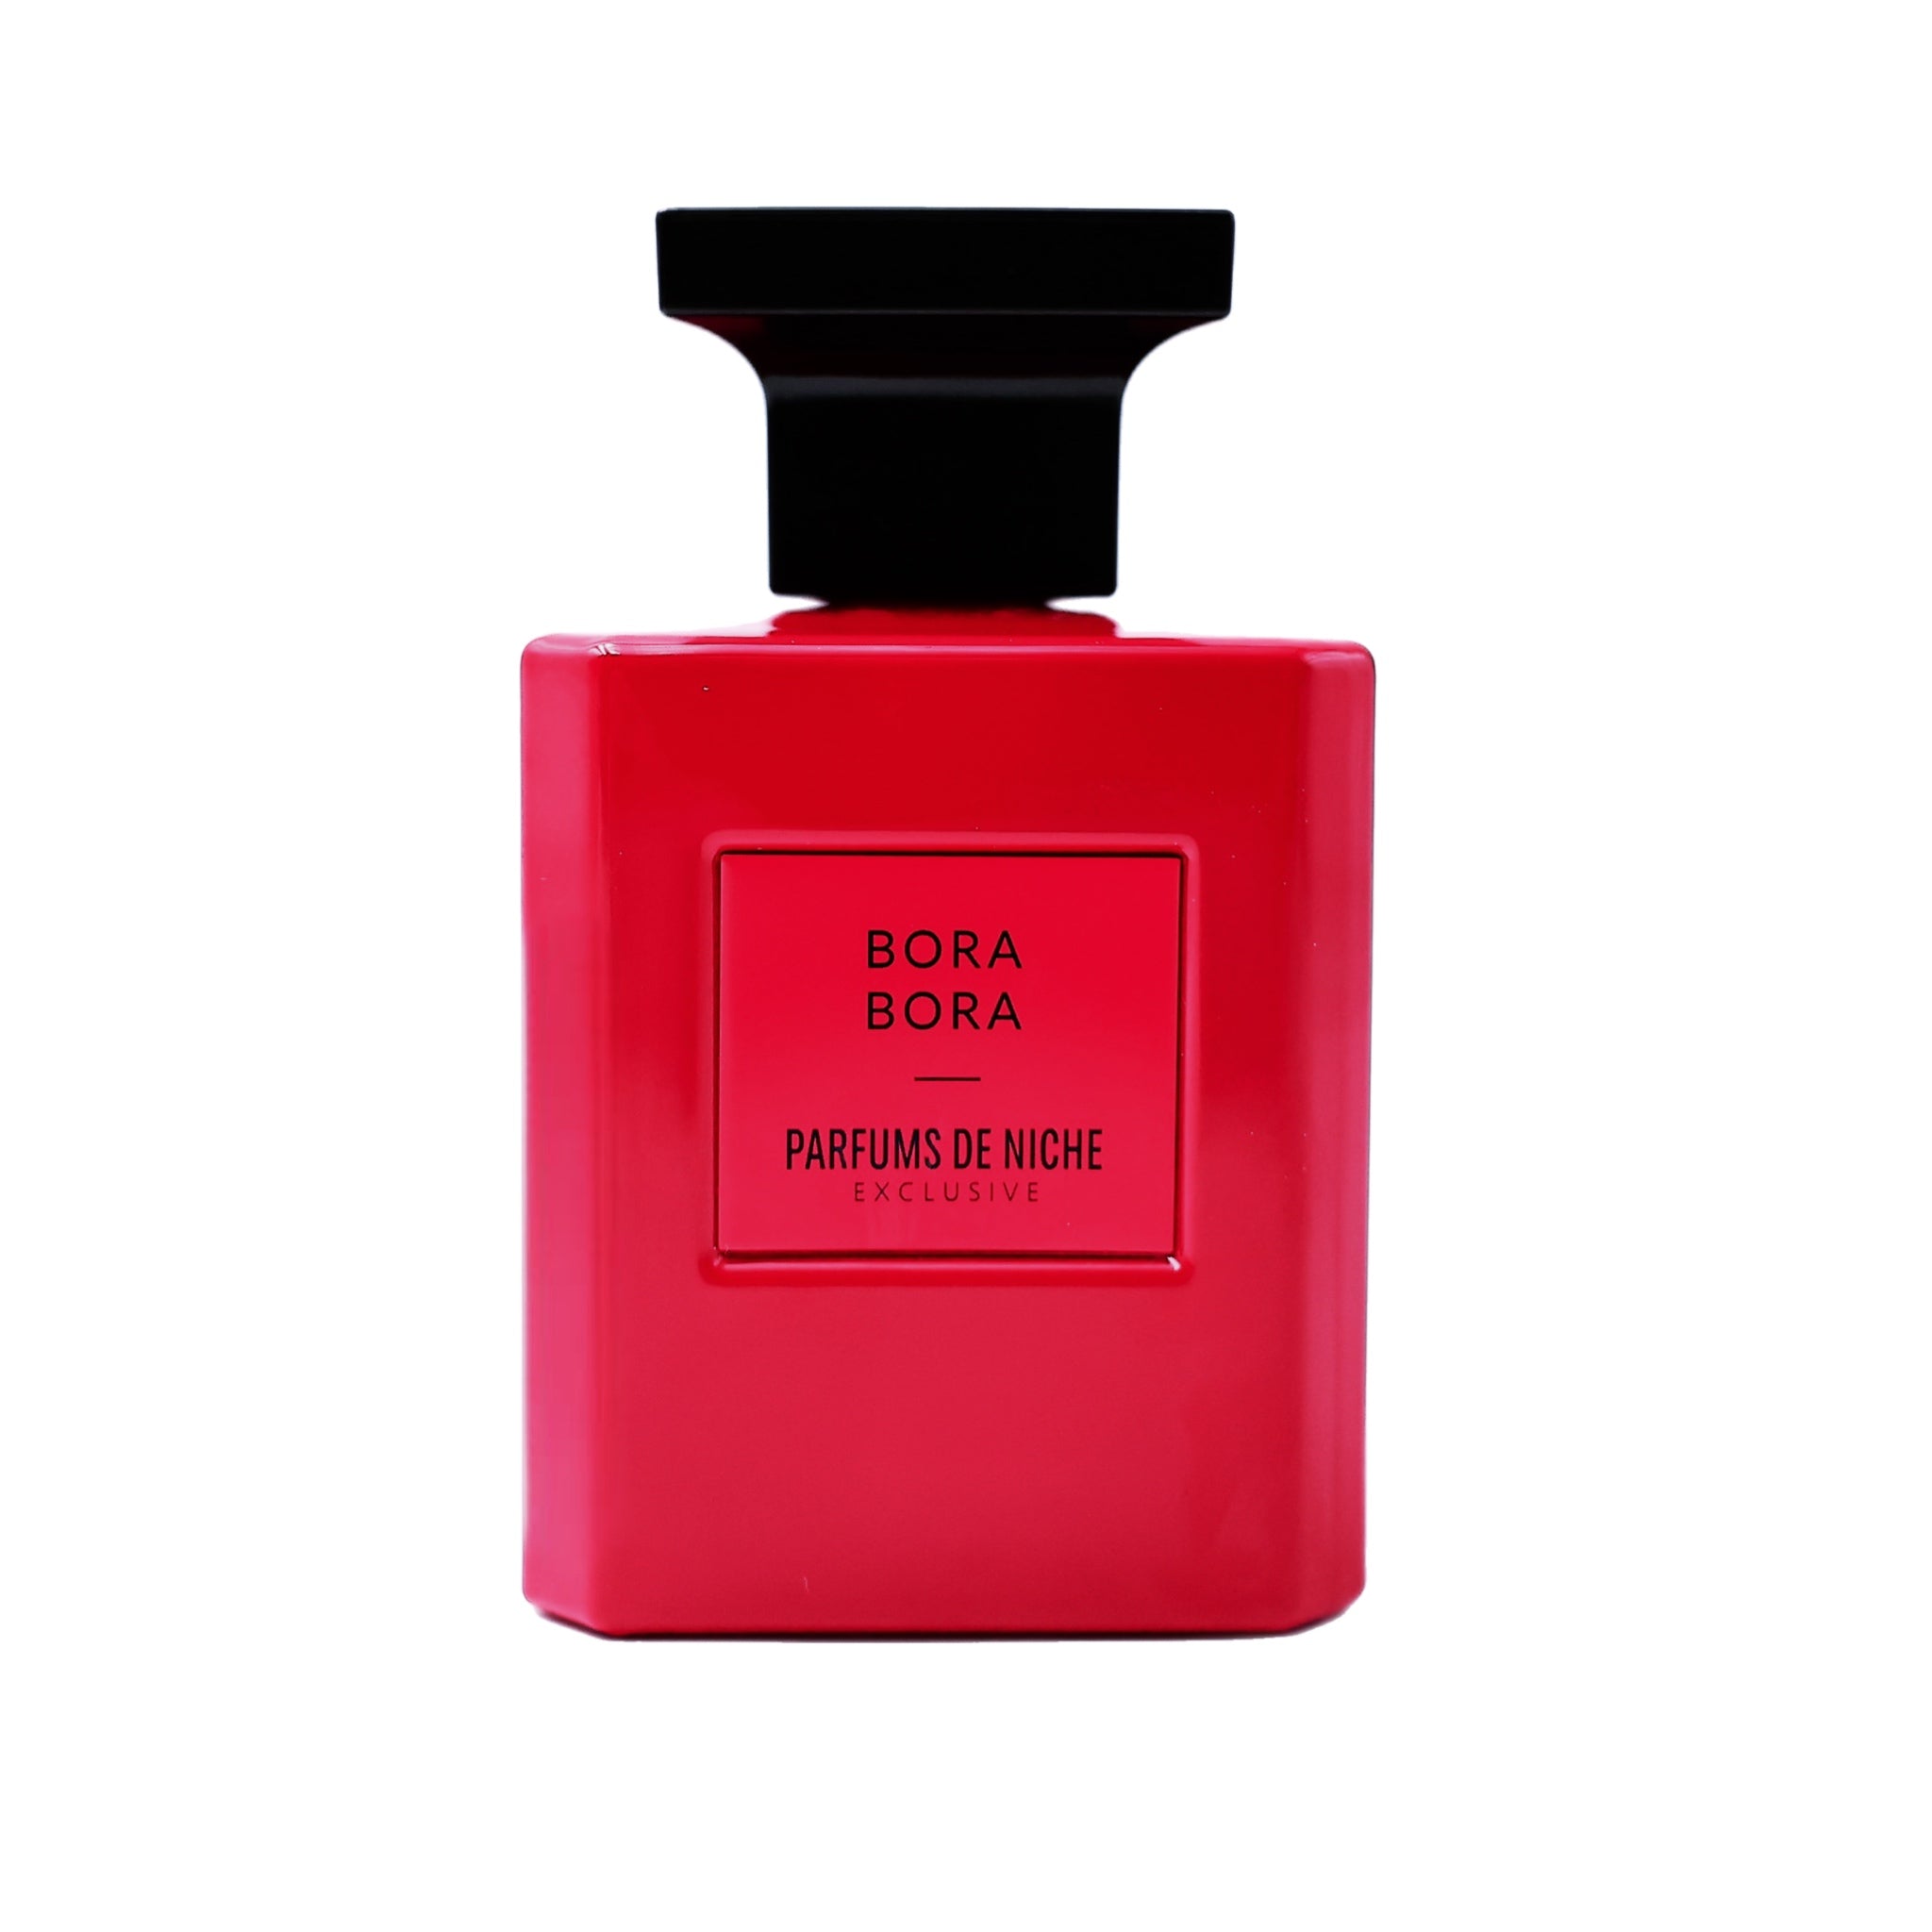 Bora Bora - Parfums de Niche Paris 100 ml